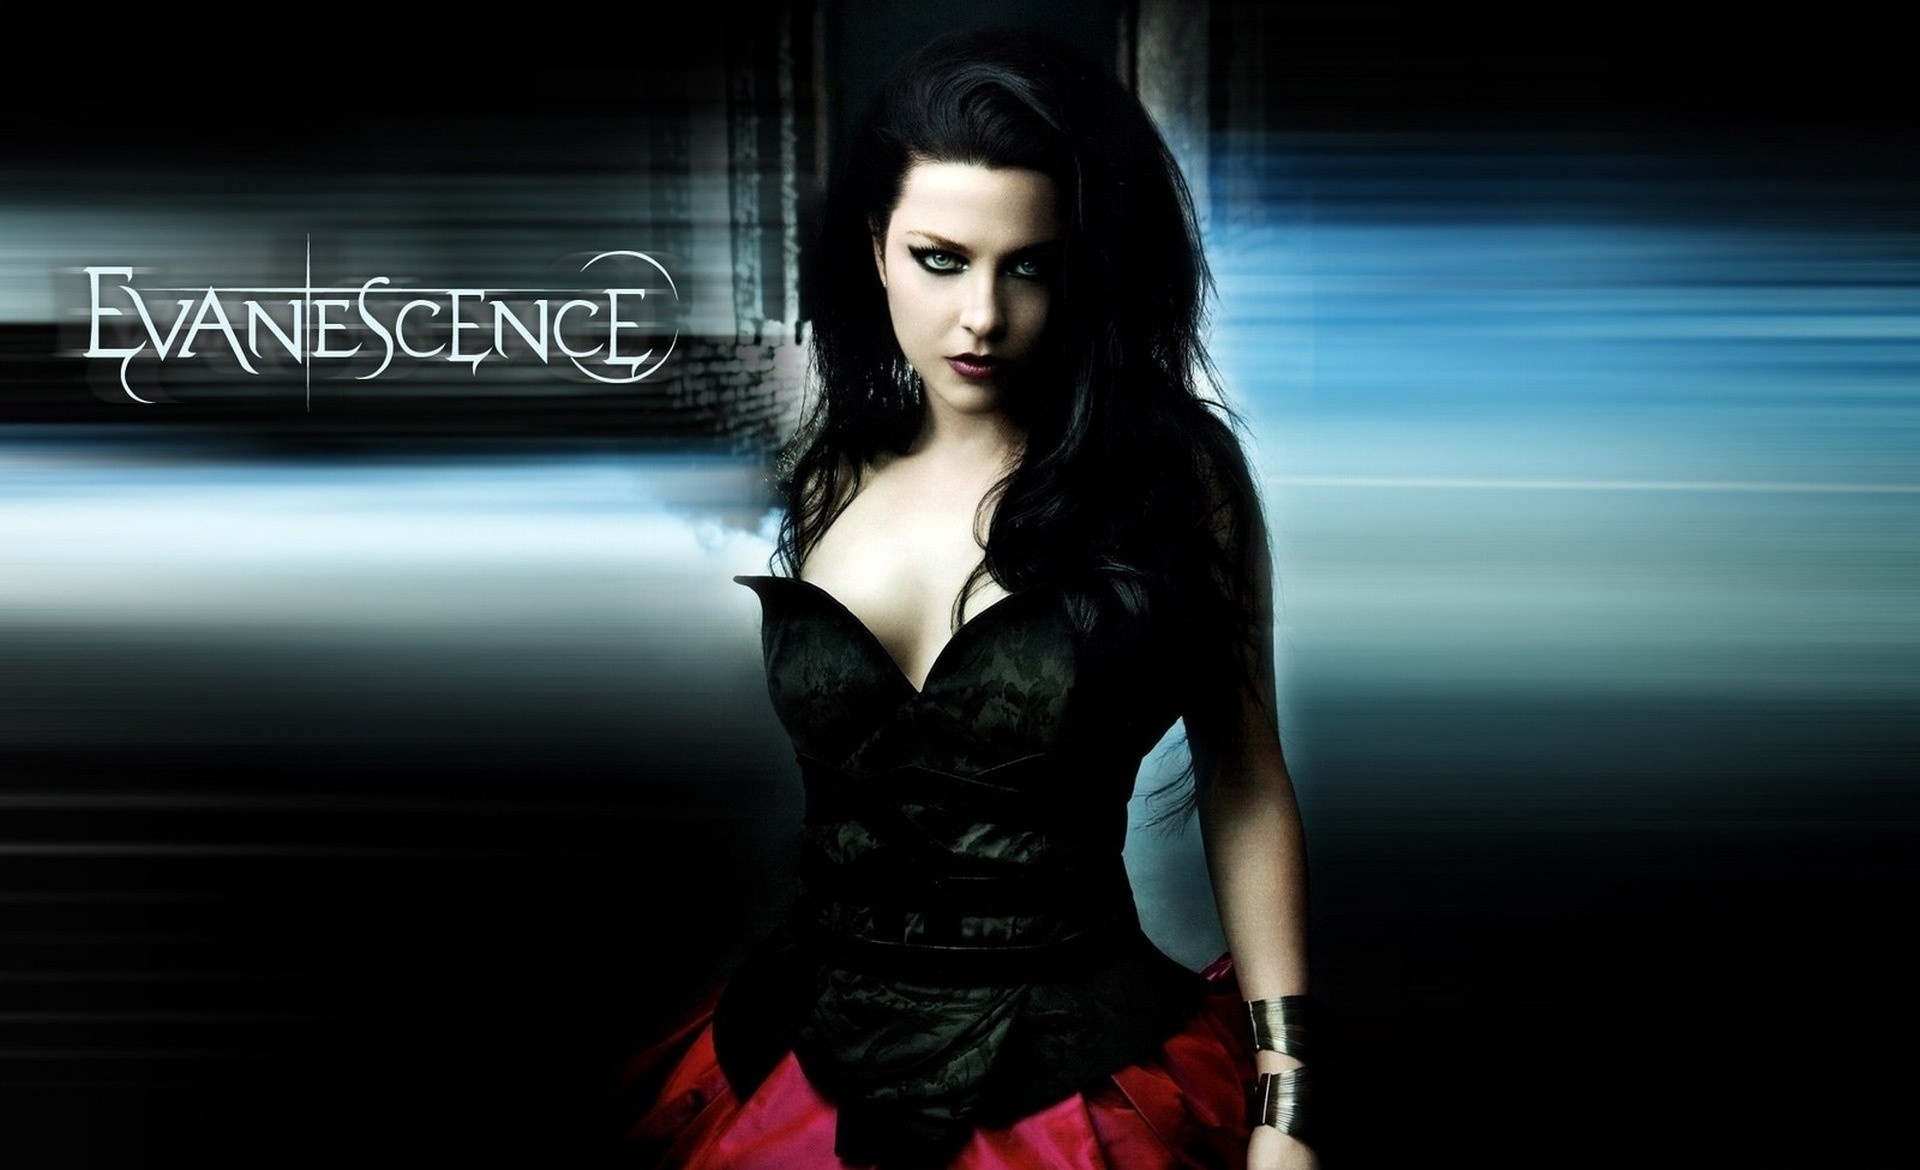 Star Evanescence Photos